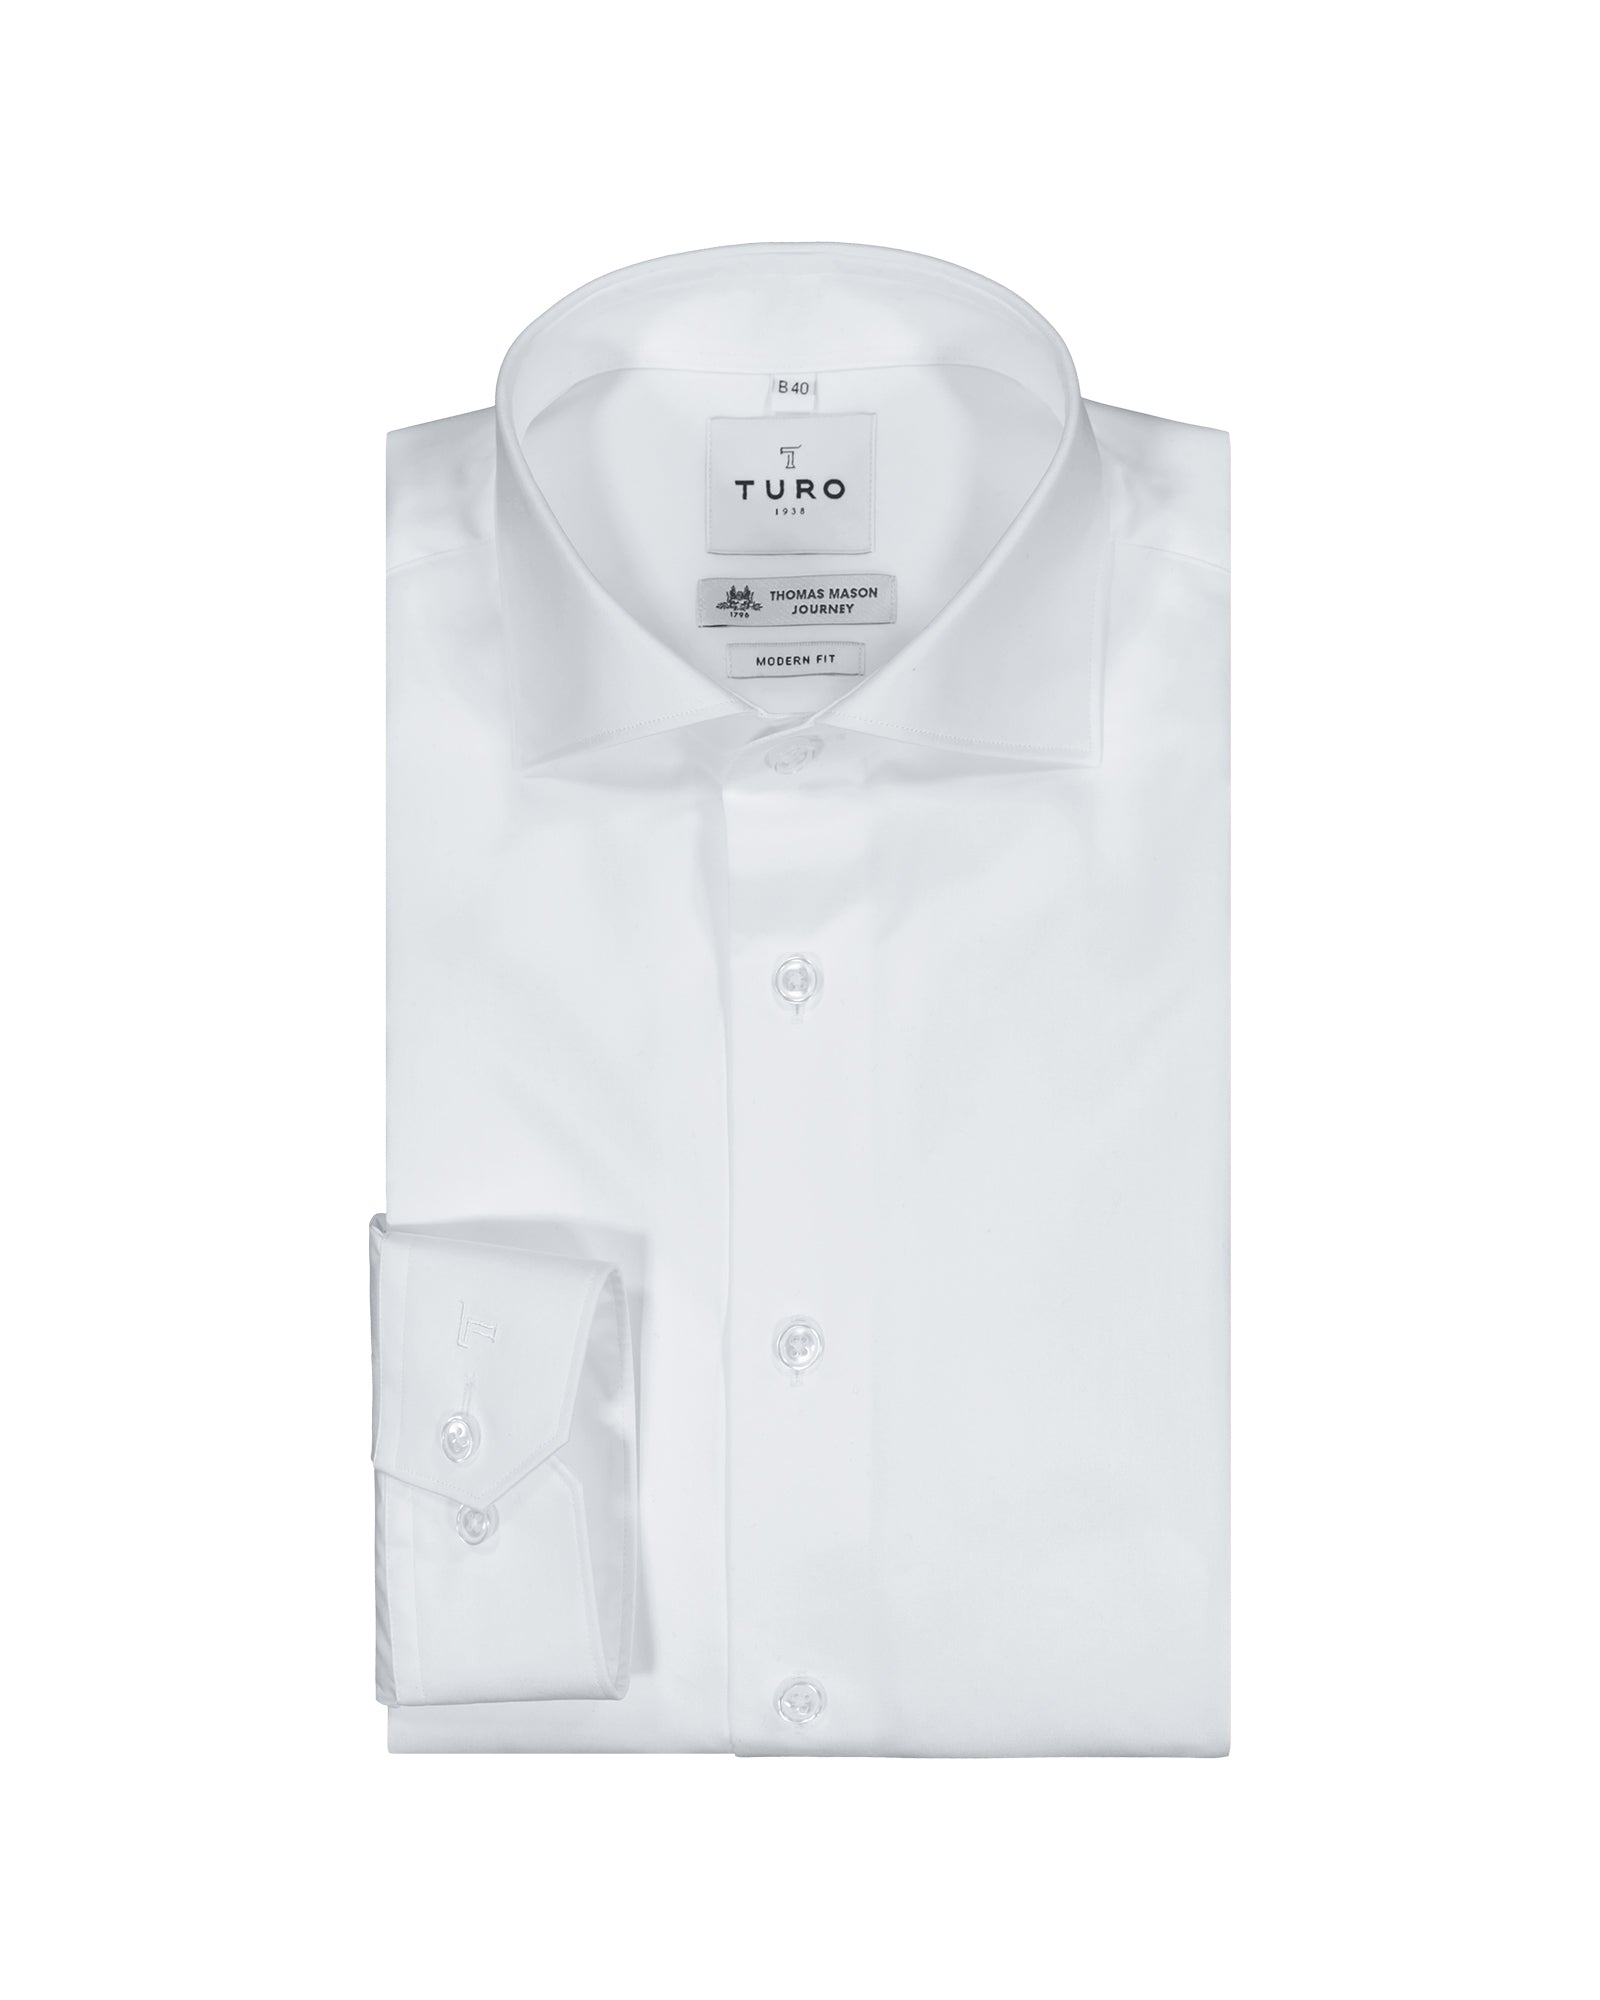 Turo - Slim fit shirt in Thomas Mason journey